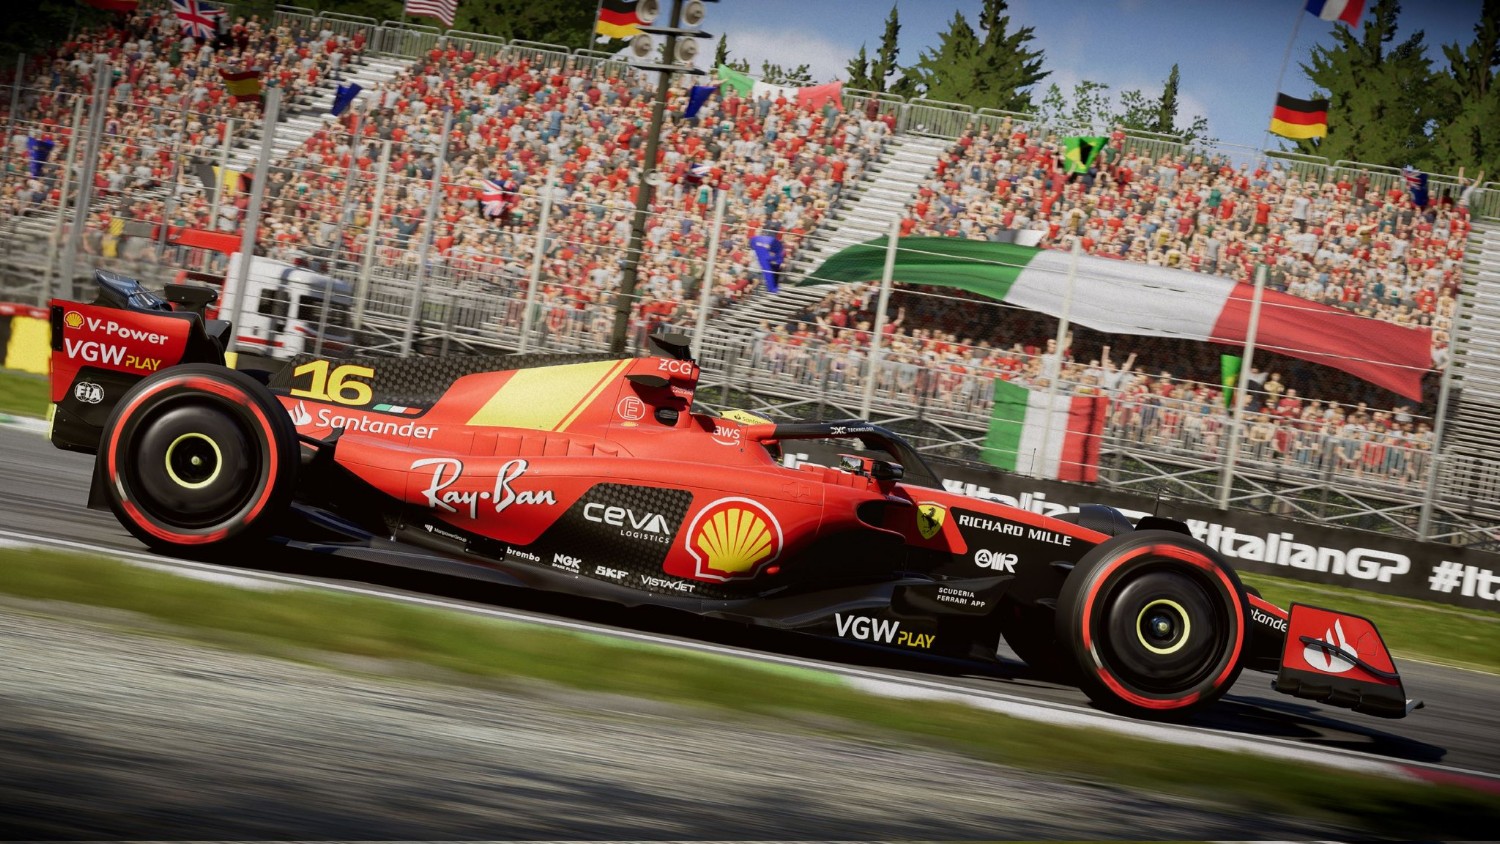 F1 Ferrari reveals special livery for Italian GP at Monza